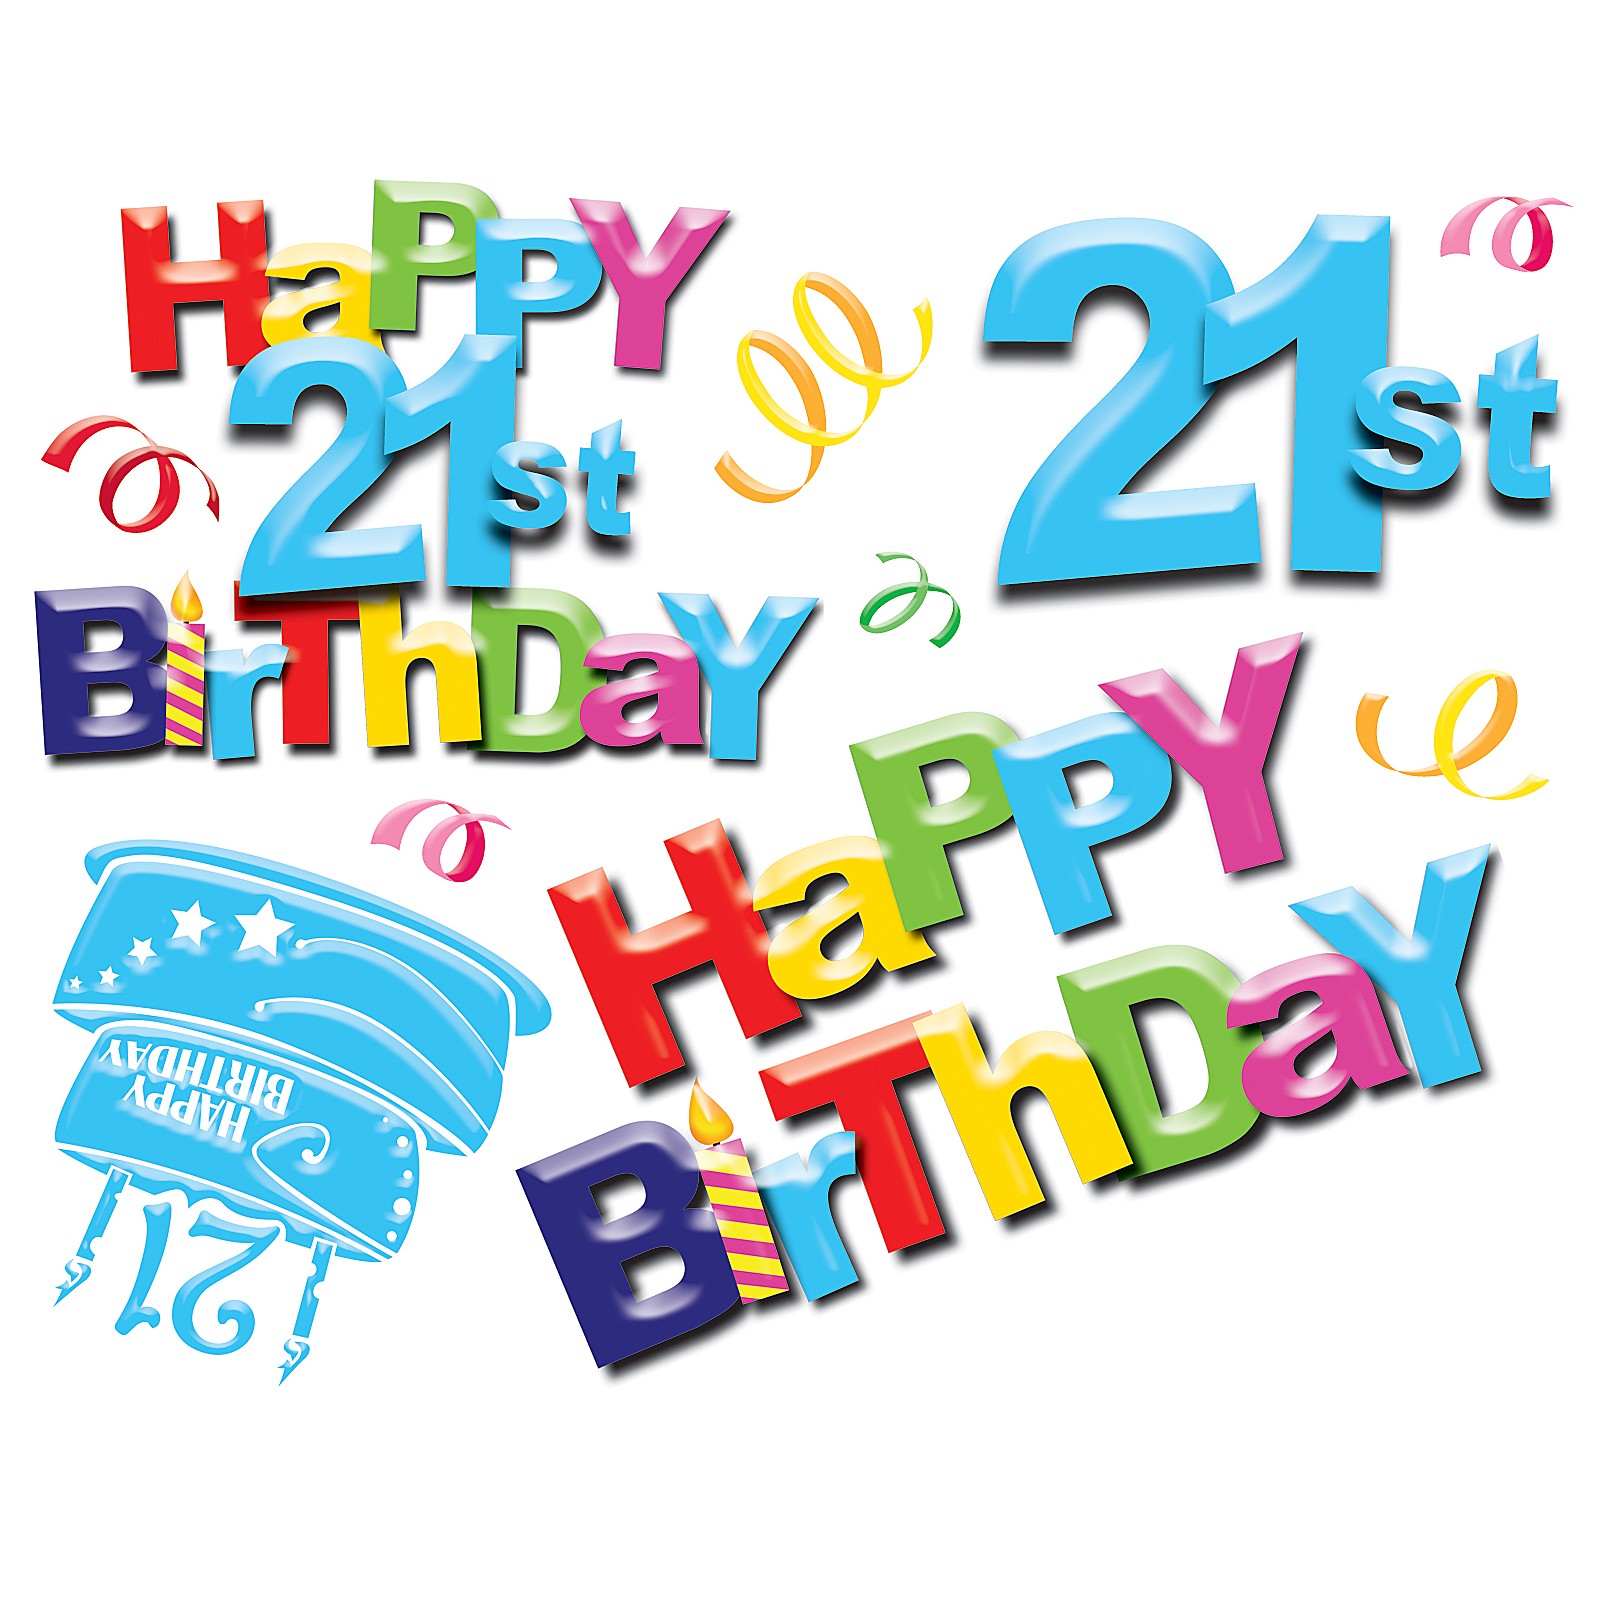 free-happy-21st-birthday-graphics-download-free-happy-21st-birthday-graphics-png-images-free